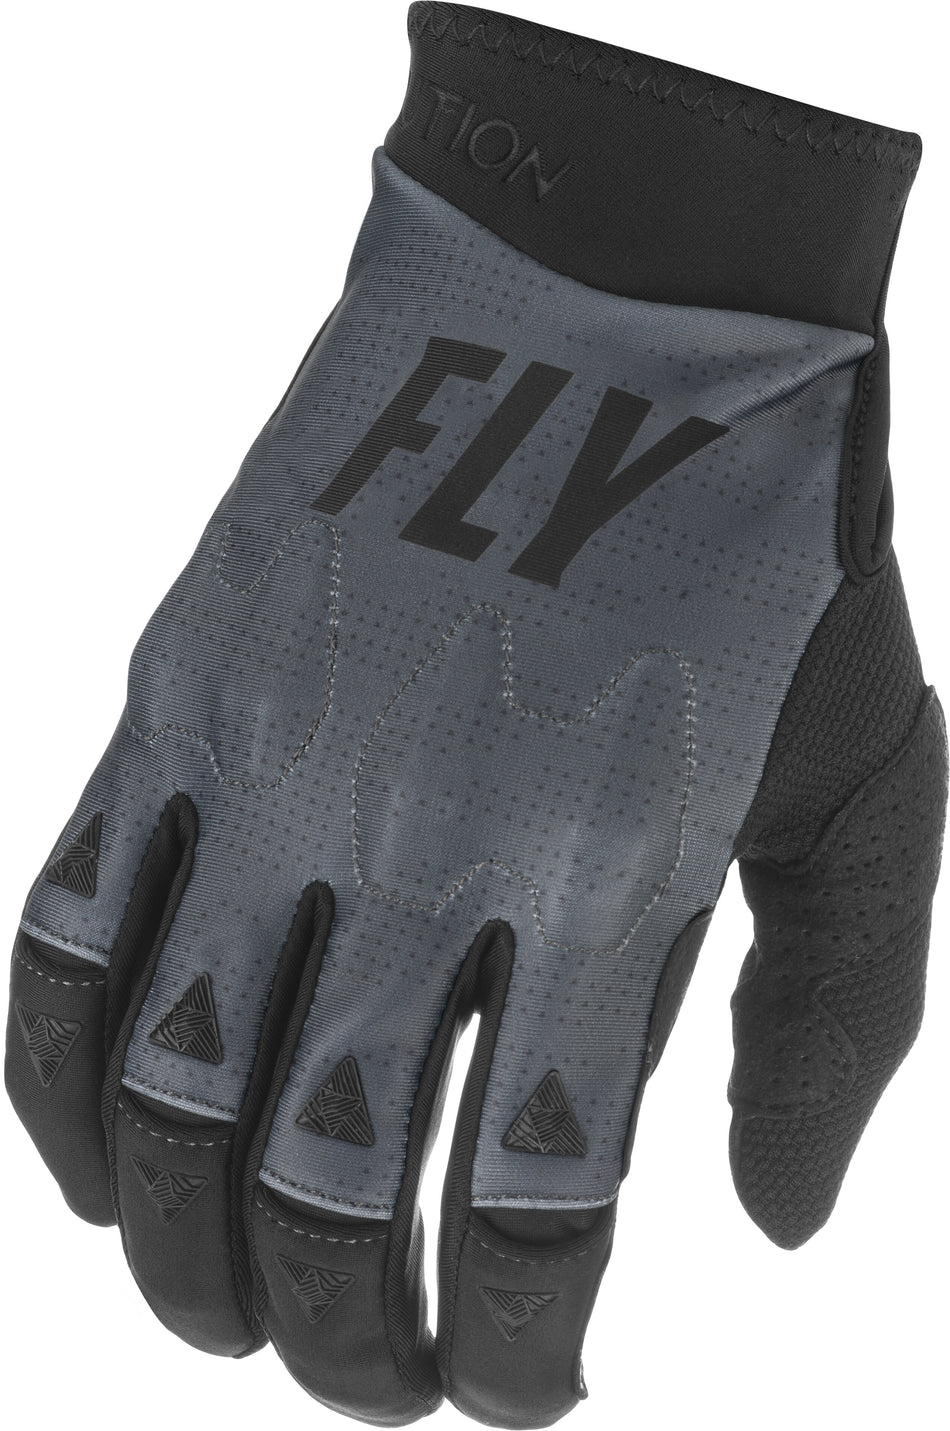 FLY RACING Evolution Dst Gloves Grey/Black/Stone Sz 08 374-11608